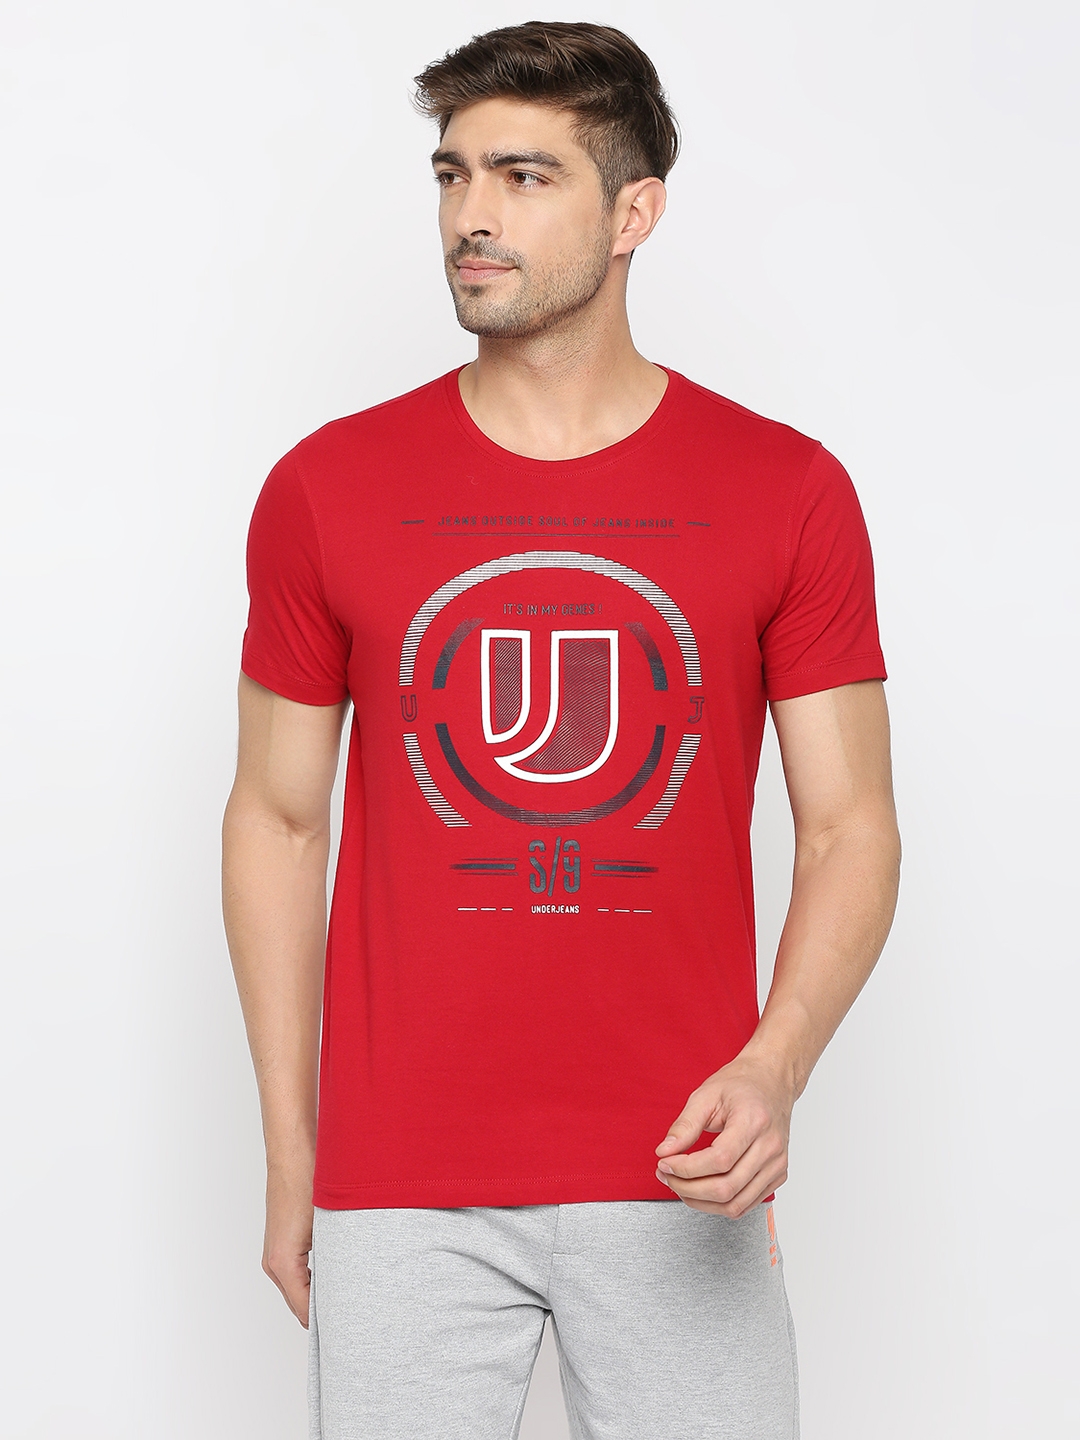 Underjeans by Spykar Men Deep Red Cotton Round Neck Printed Tshirt